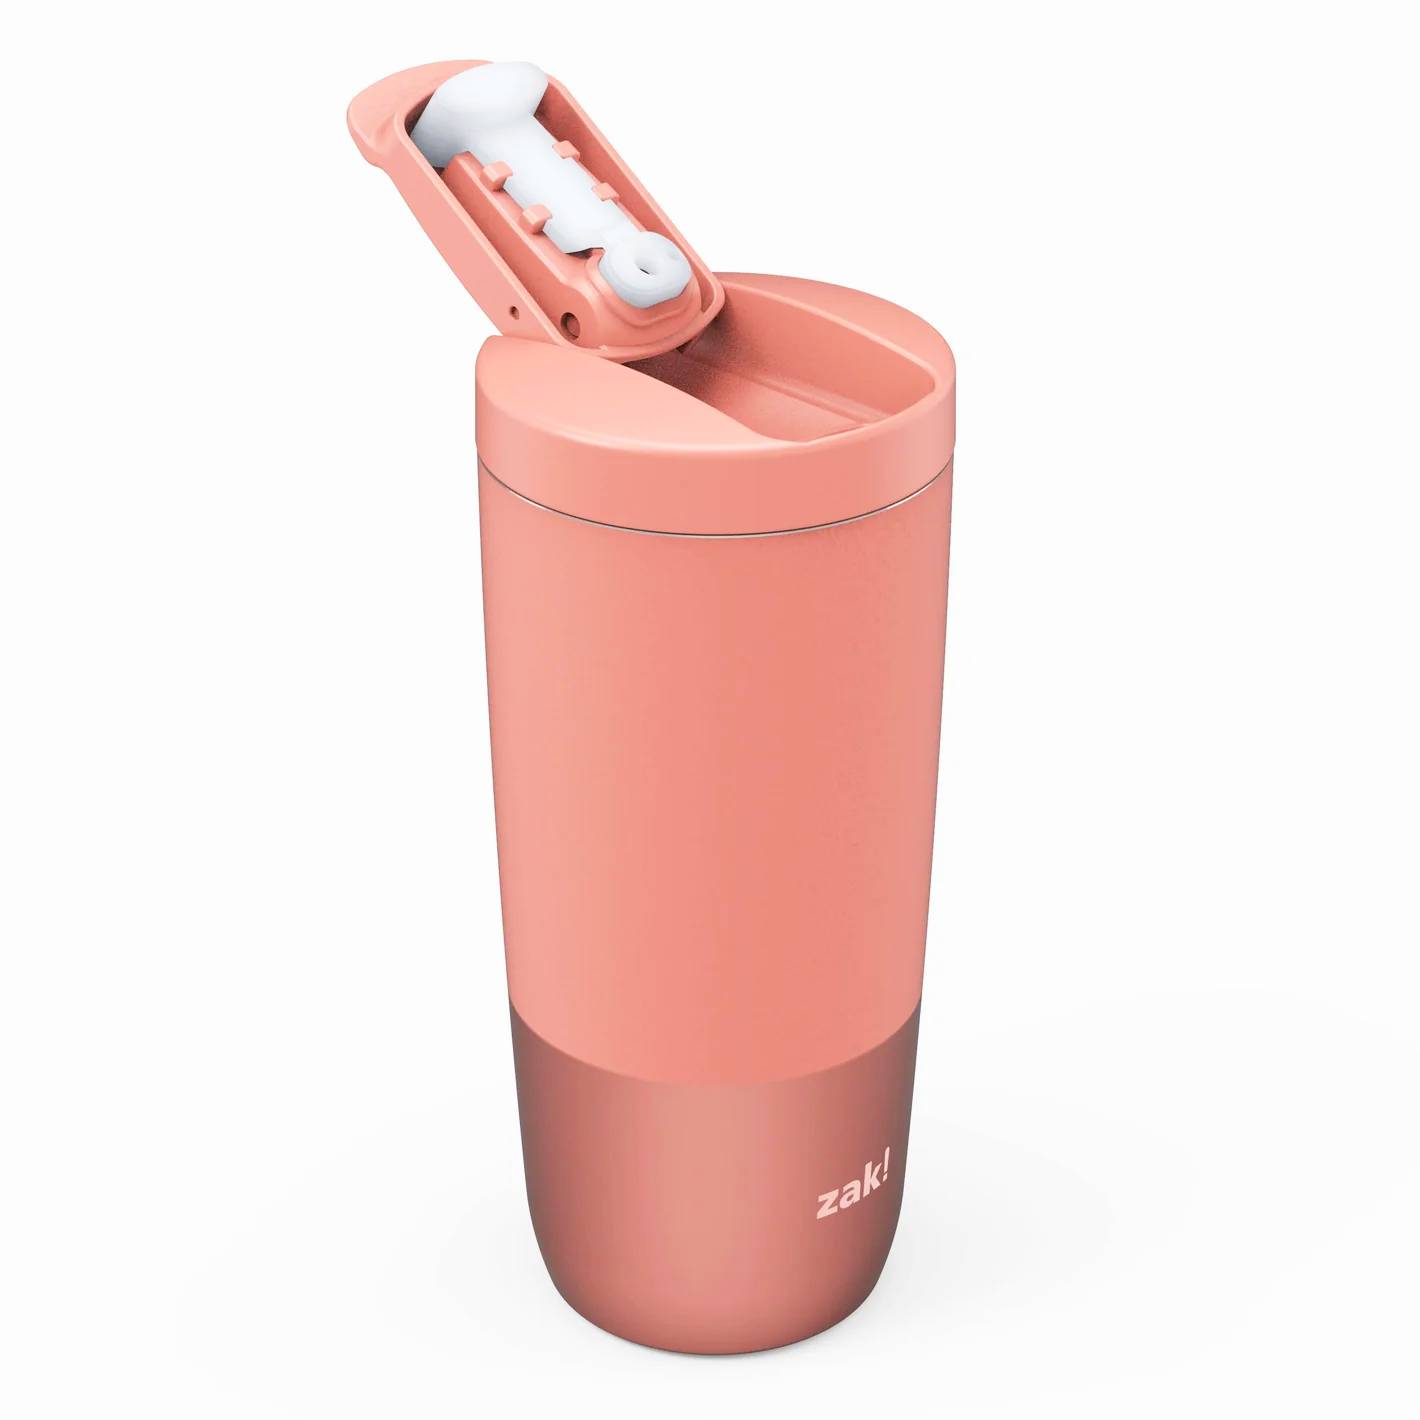 Zak! Stainless Steel Vacuum Insulated Coffee Tumbler , Travel Mug 30 Oz Pink